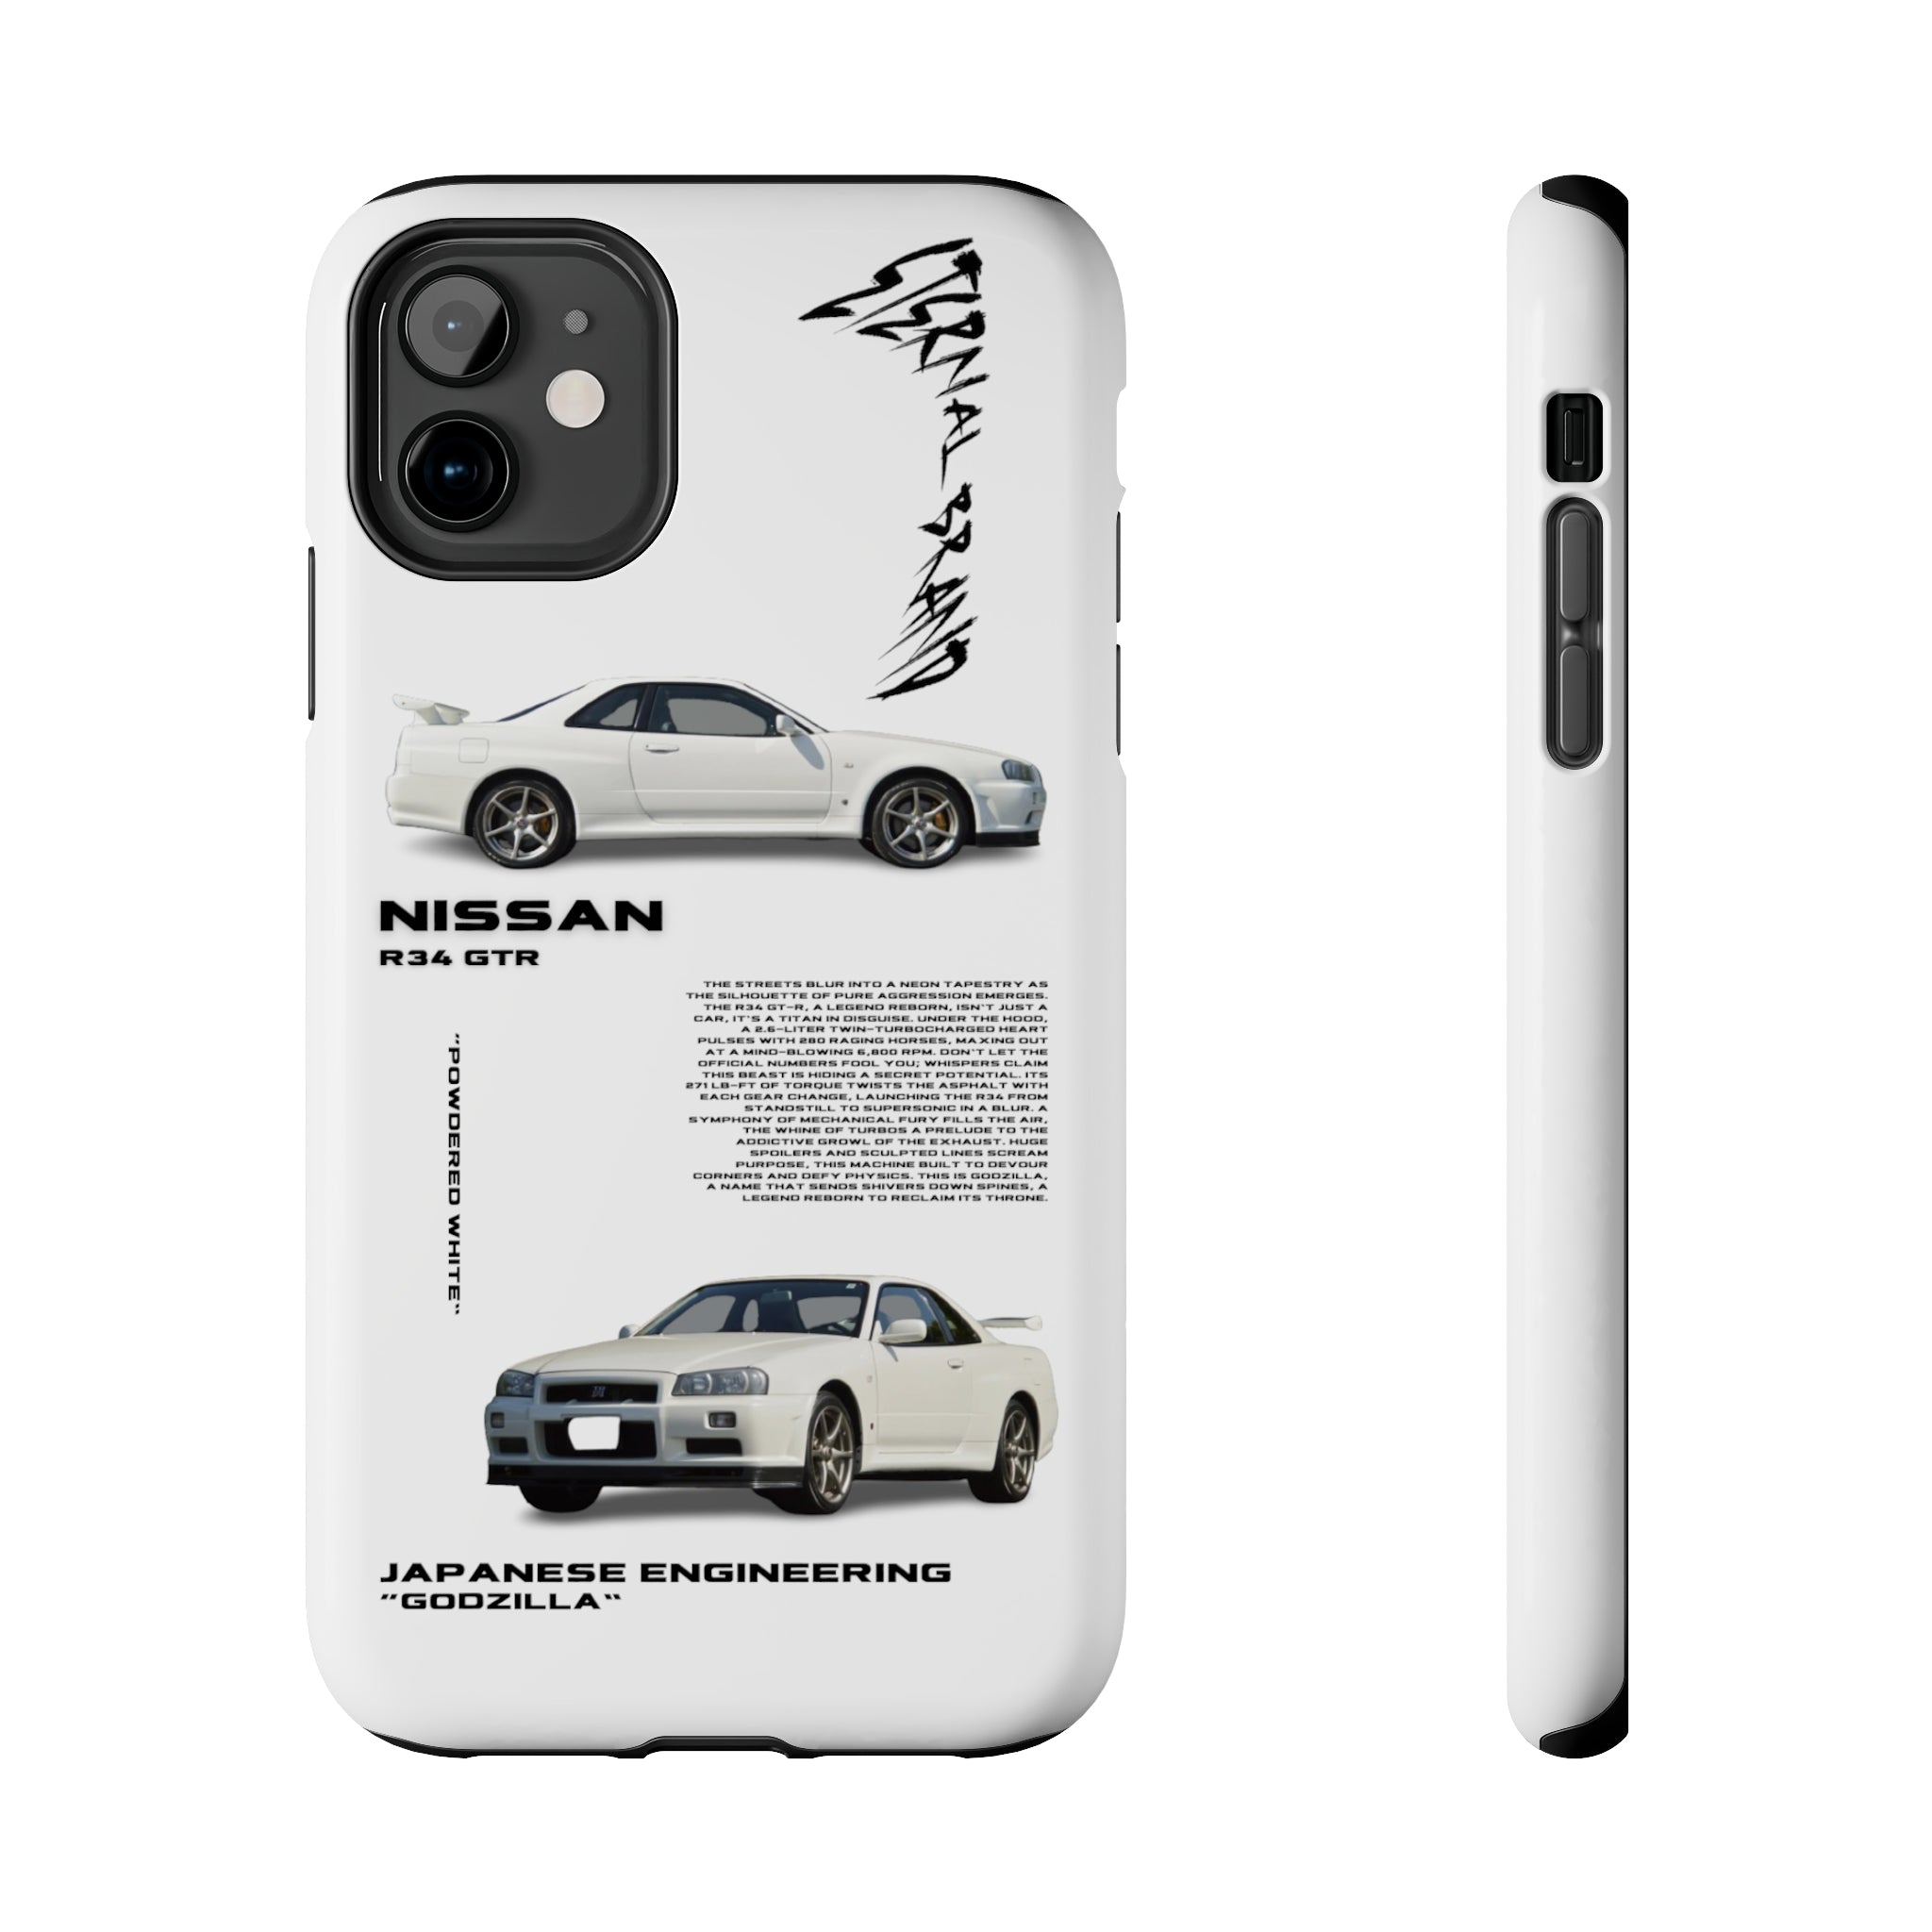 Nissan R34 GTR "White"